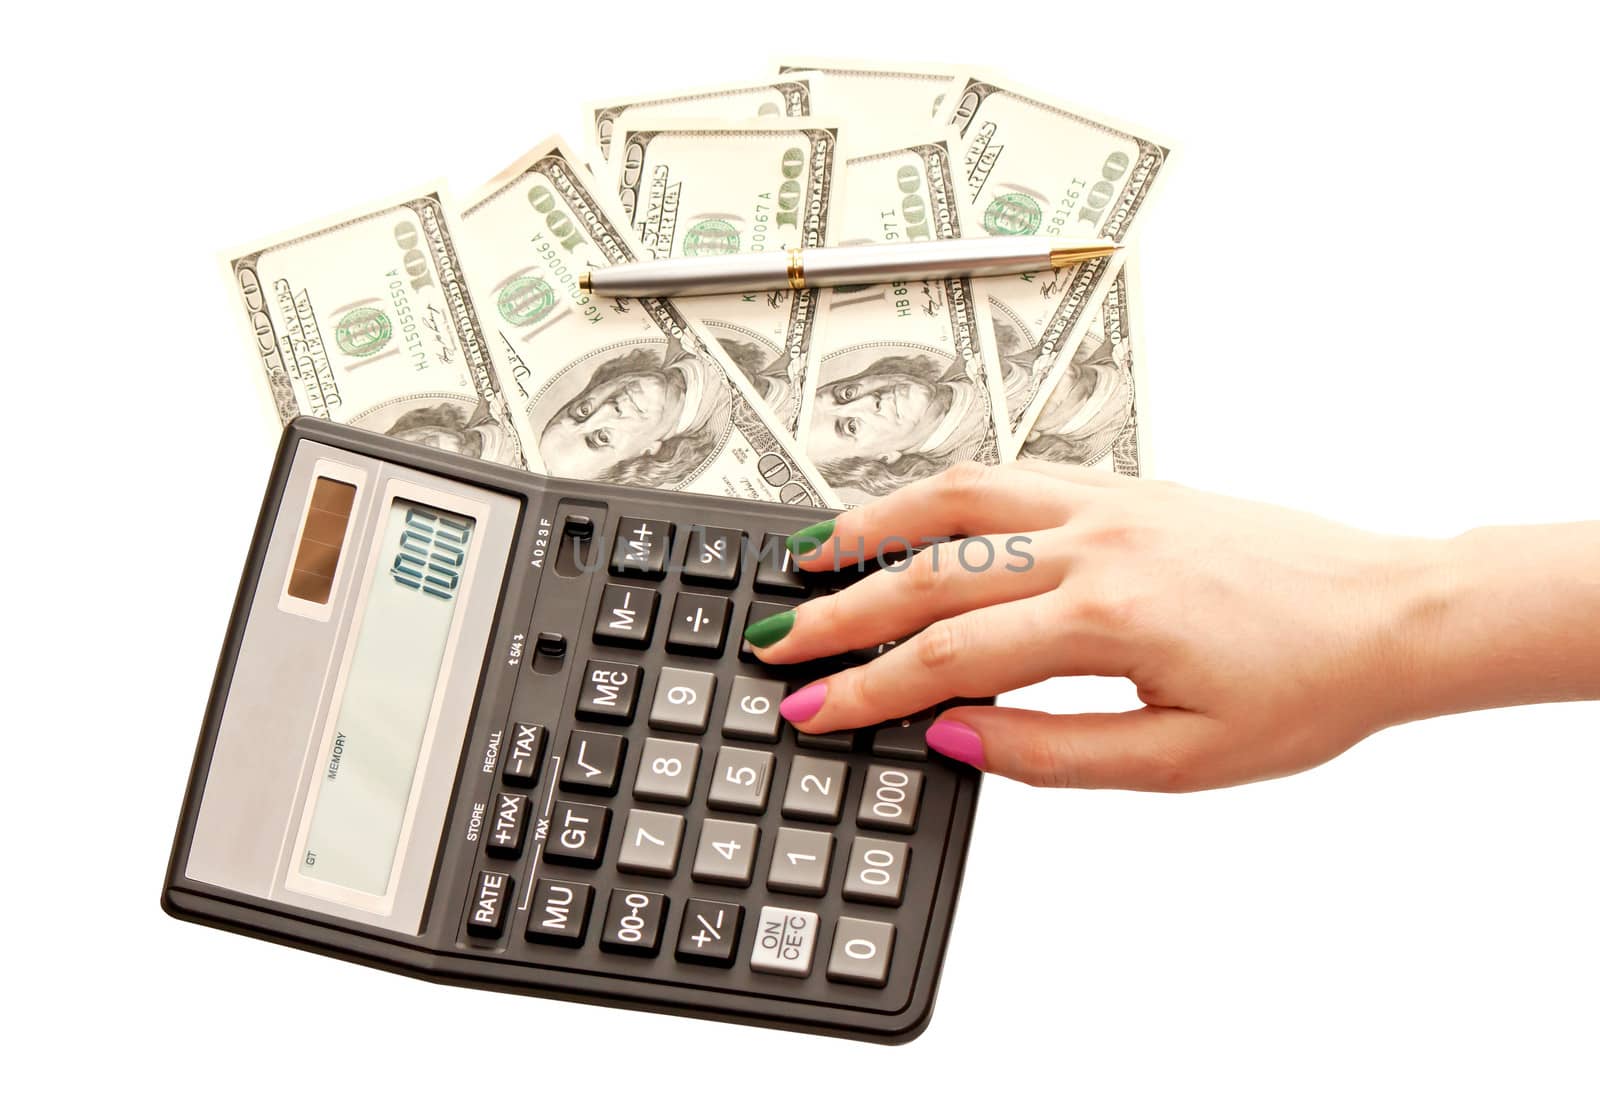 Calculator, pen, money and woman's hands by evp82